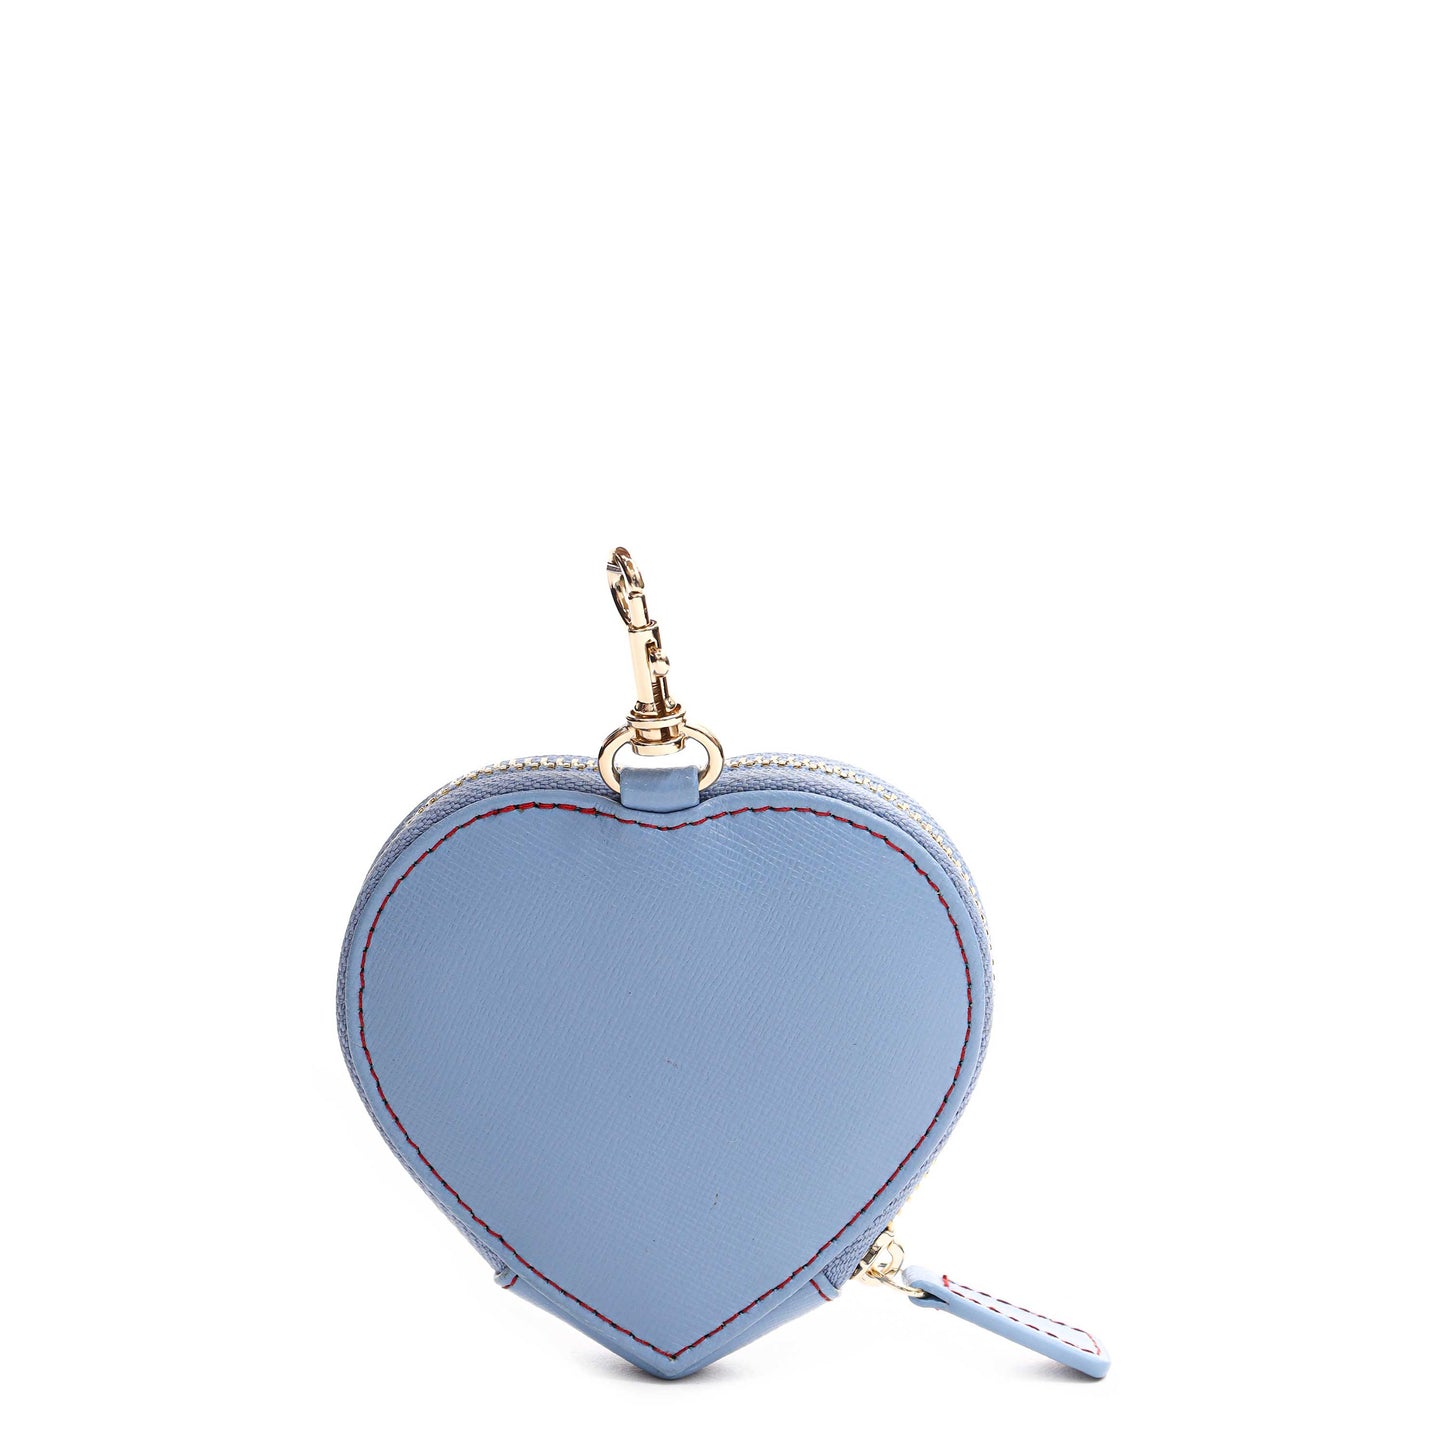 Núnoo Heart Coin Pocket Florence Sea Red Stich w. Gold Wallet Light blue